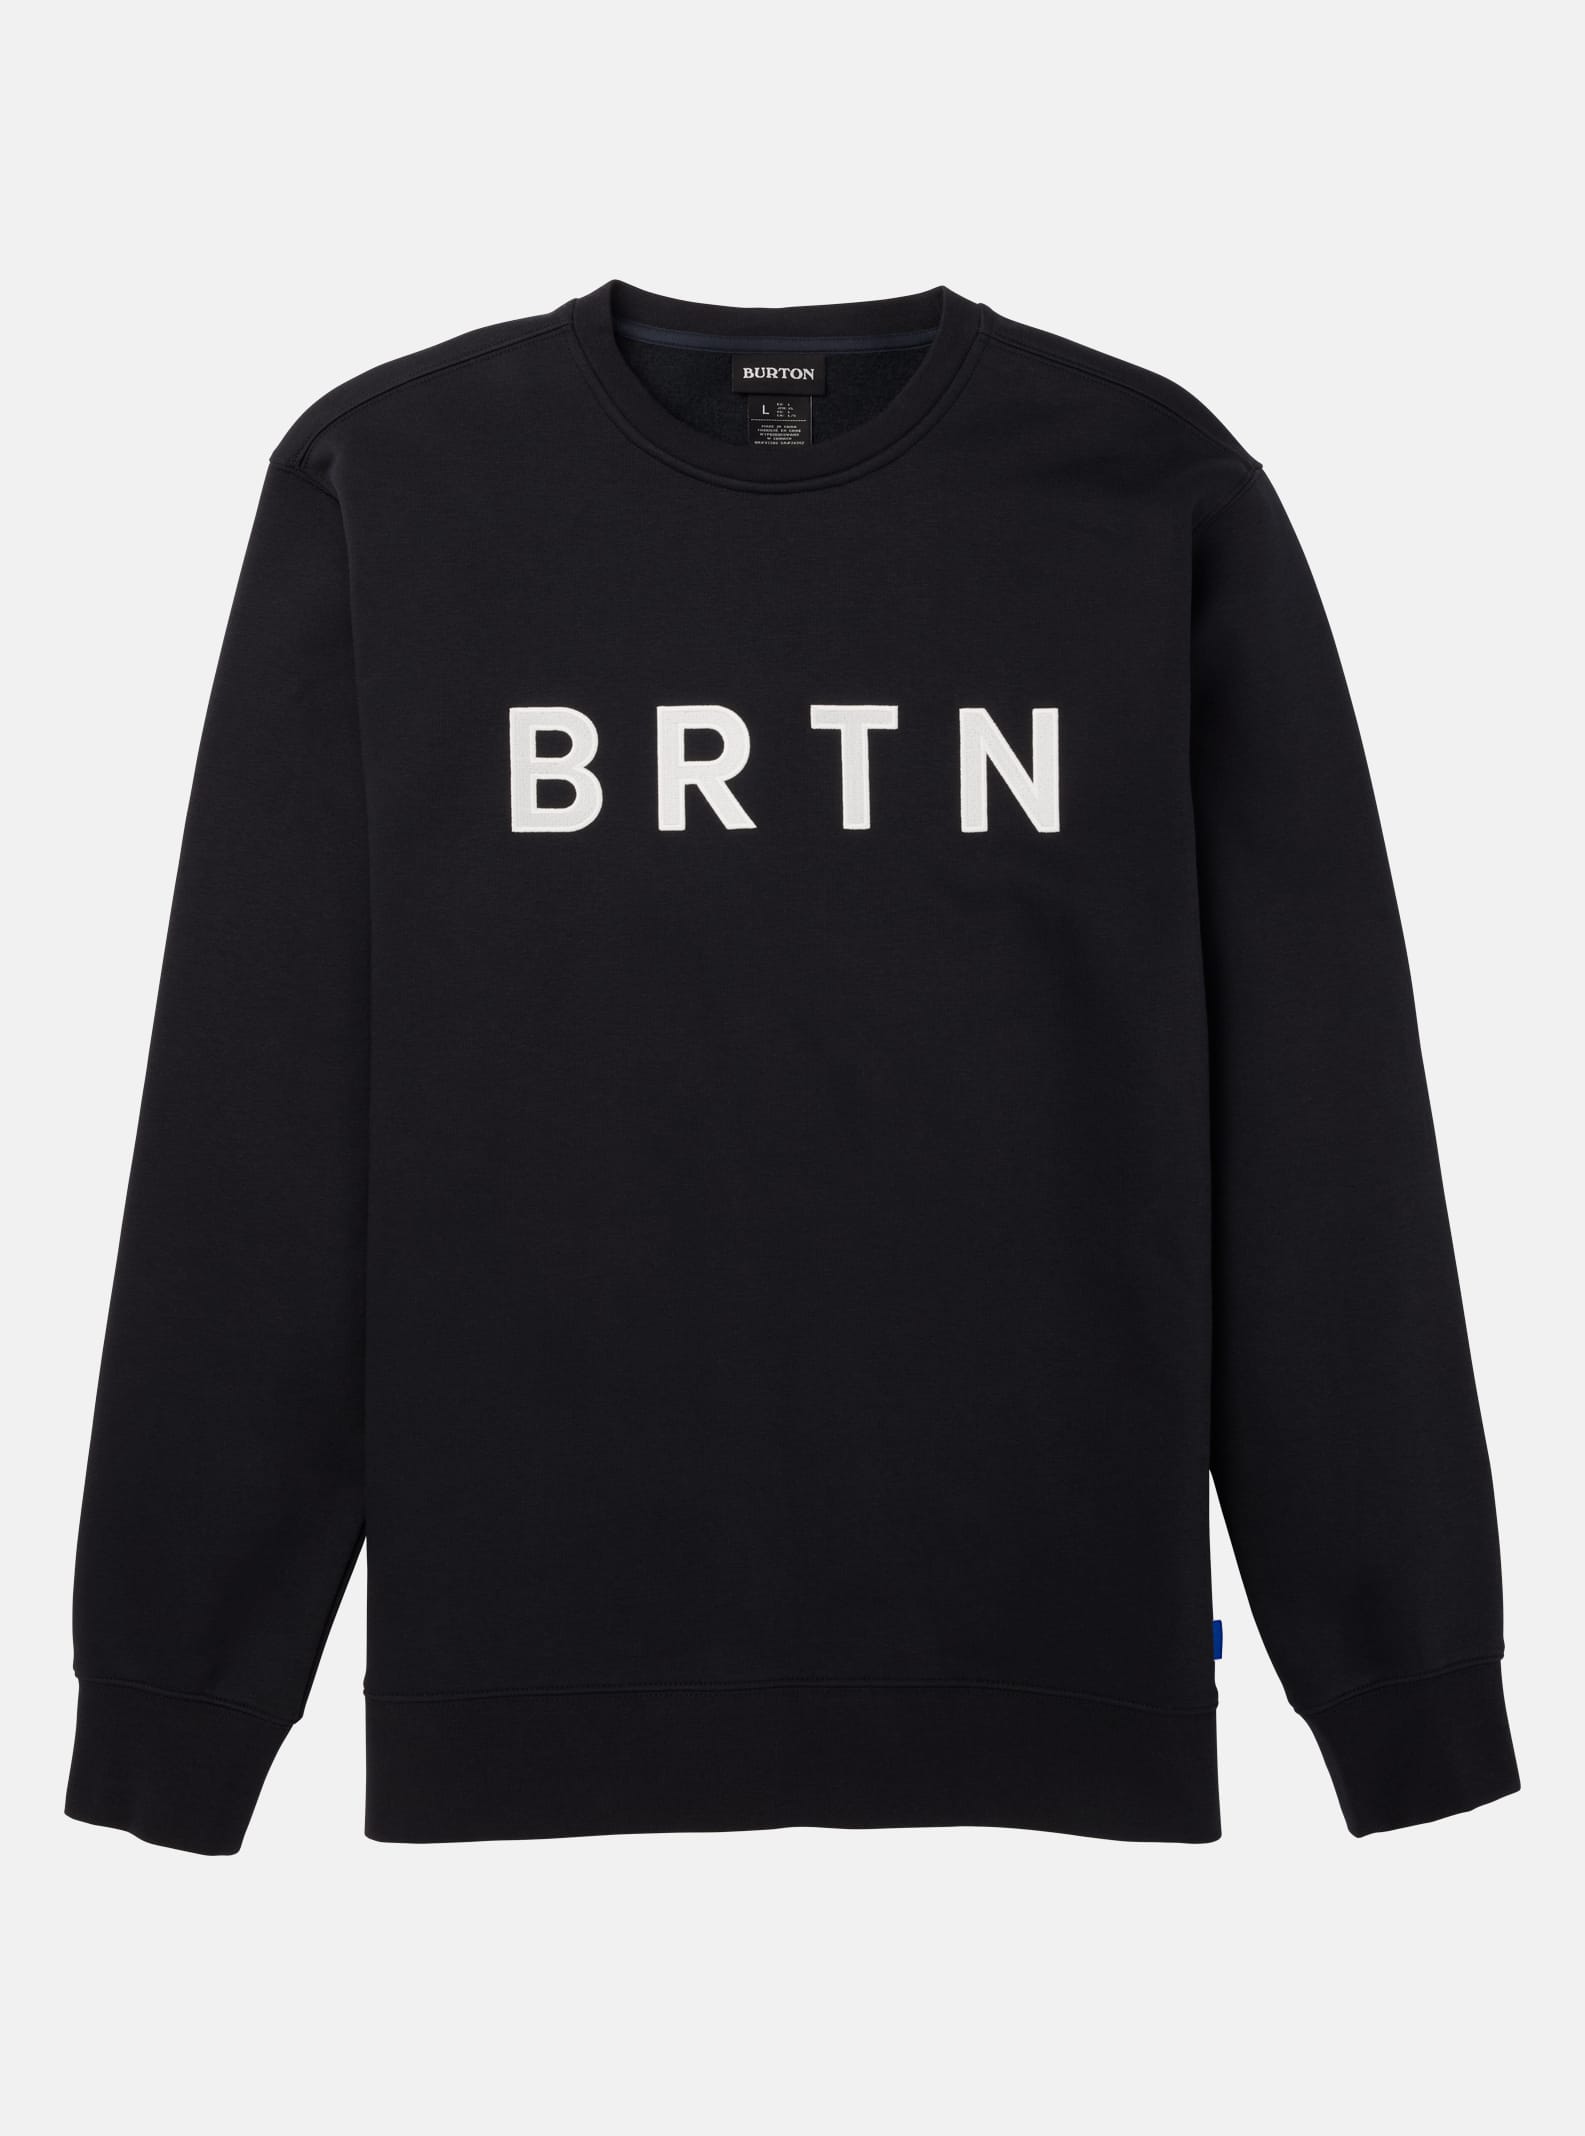 Burton Sweatshirt - BRTN Crewneck, True Black, XXS